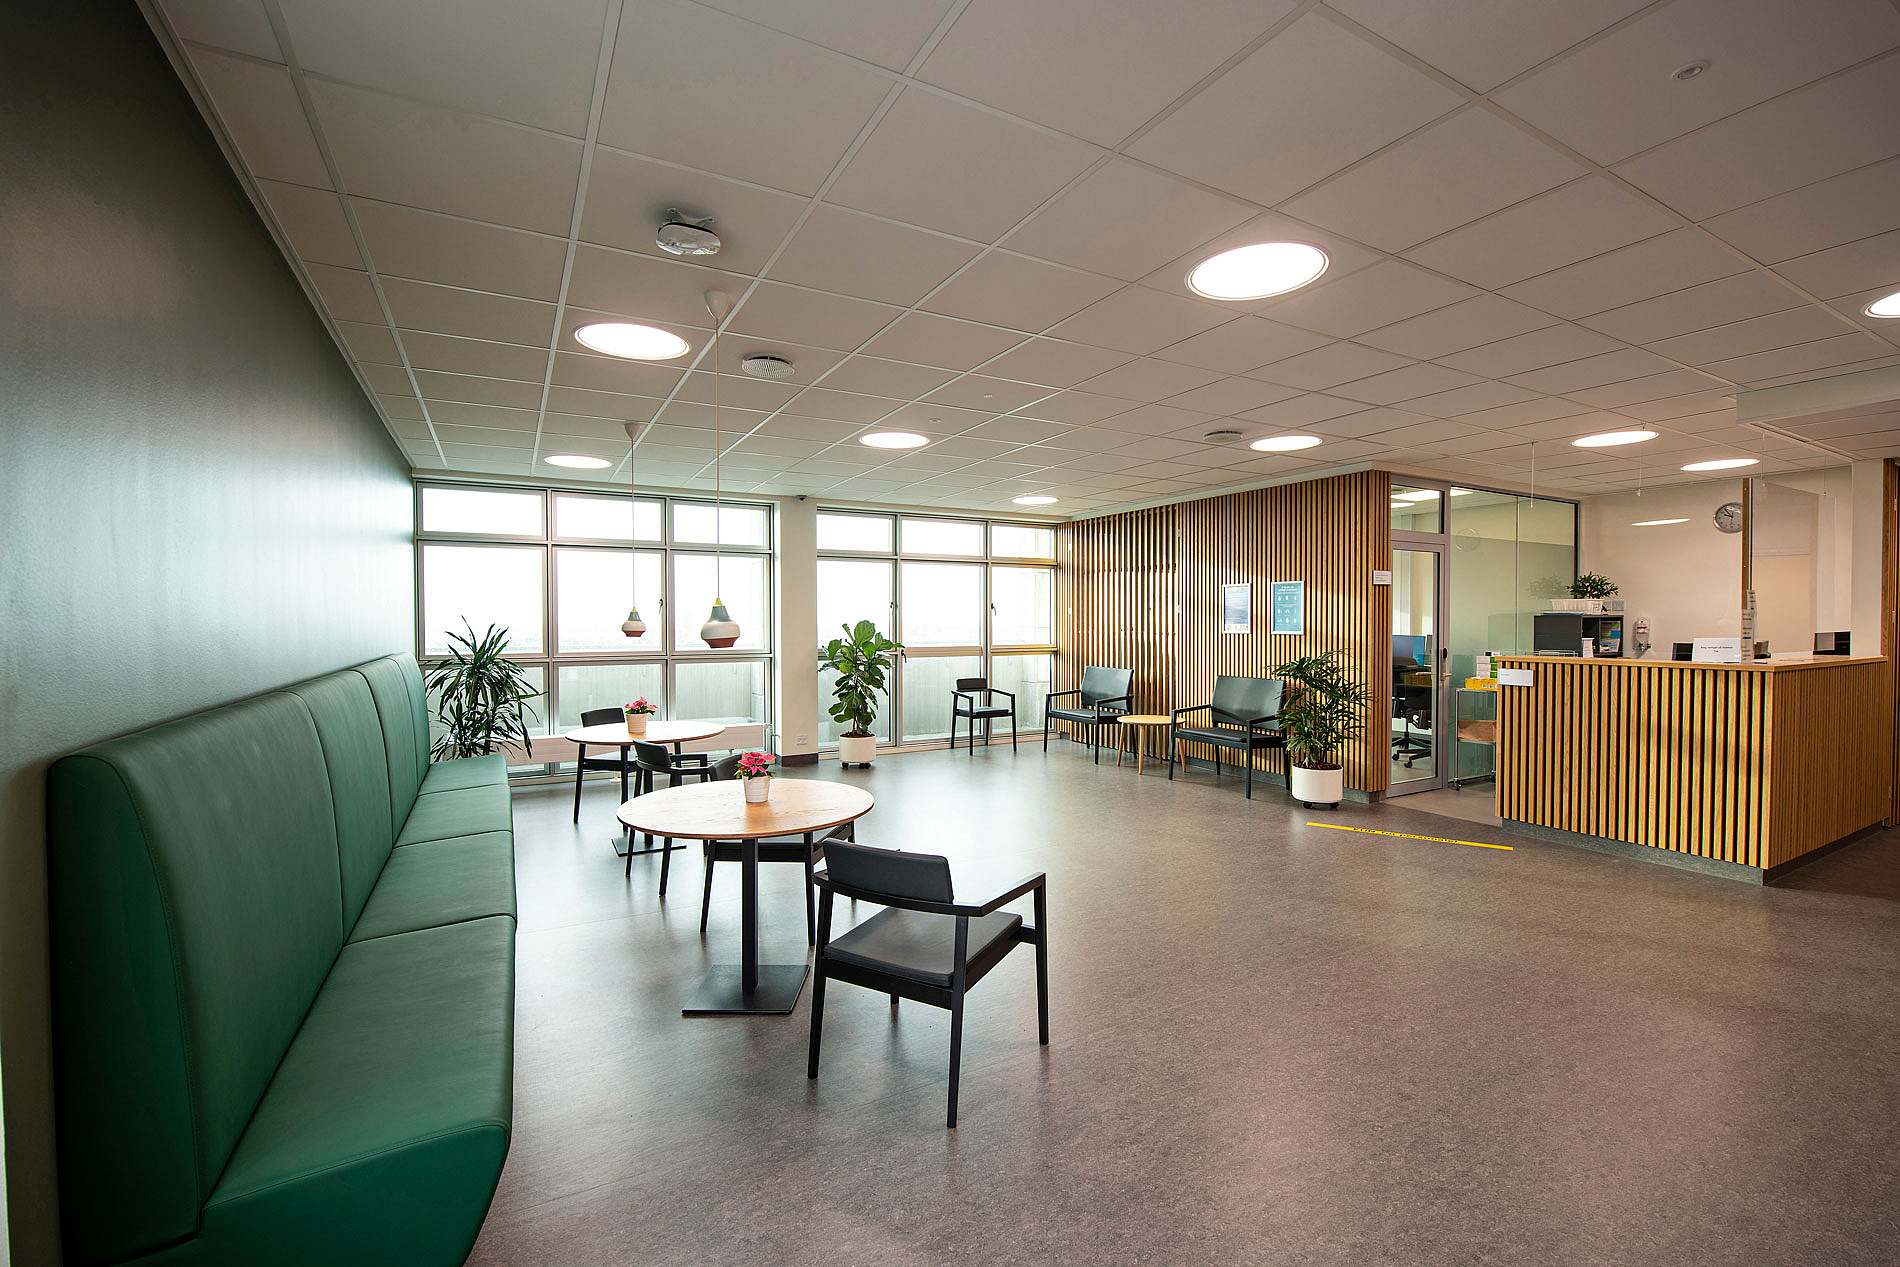 Waiting area in diabetes centre ©Steno Diabetes Center Sjælland photographer Carsten Andersen